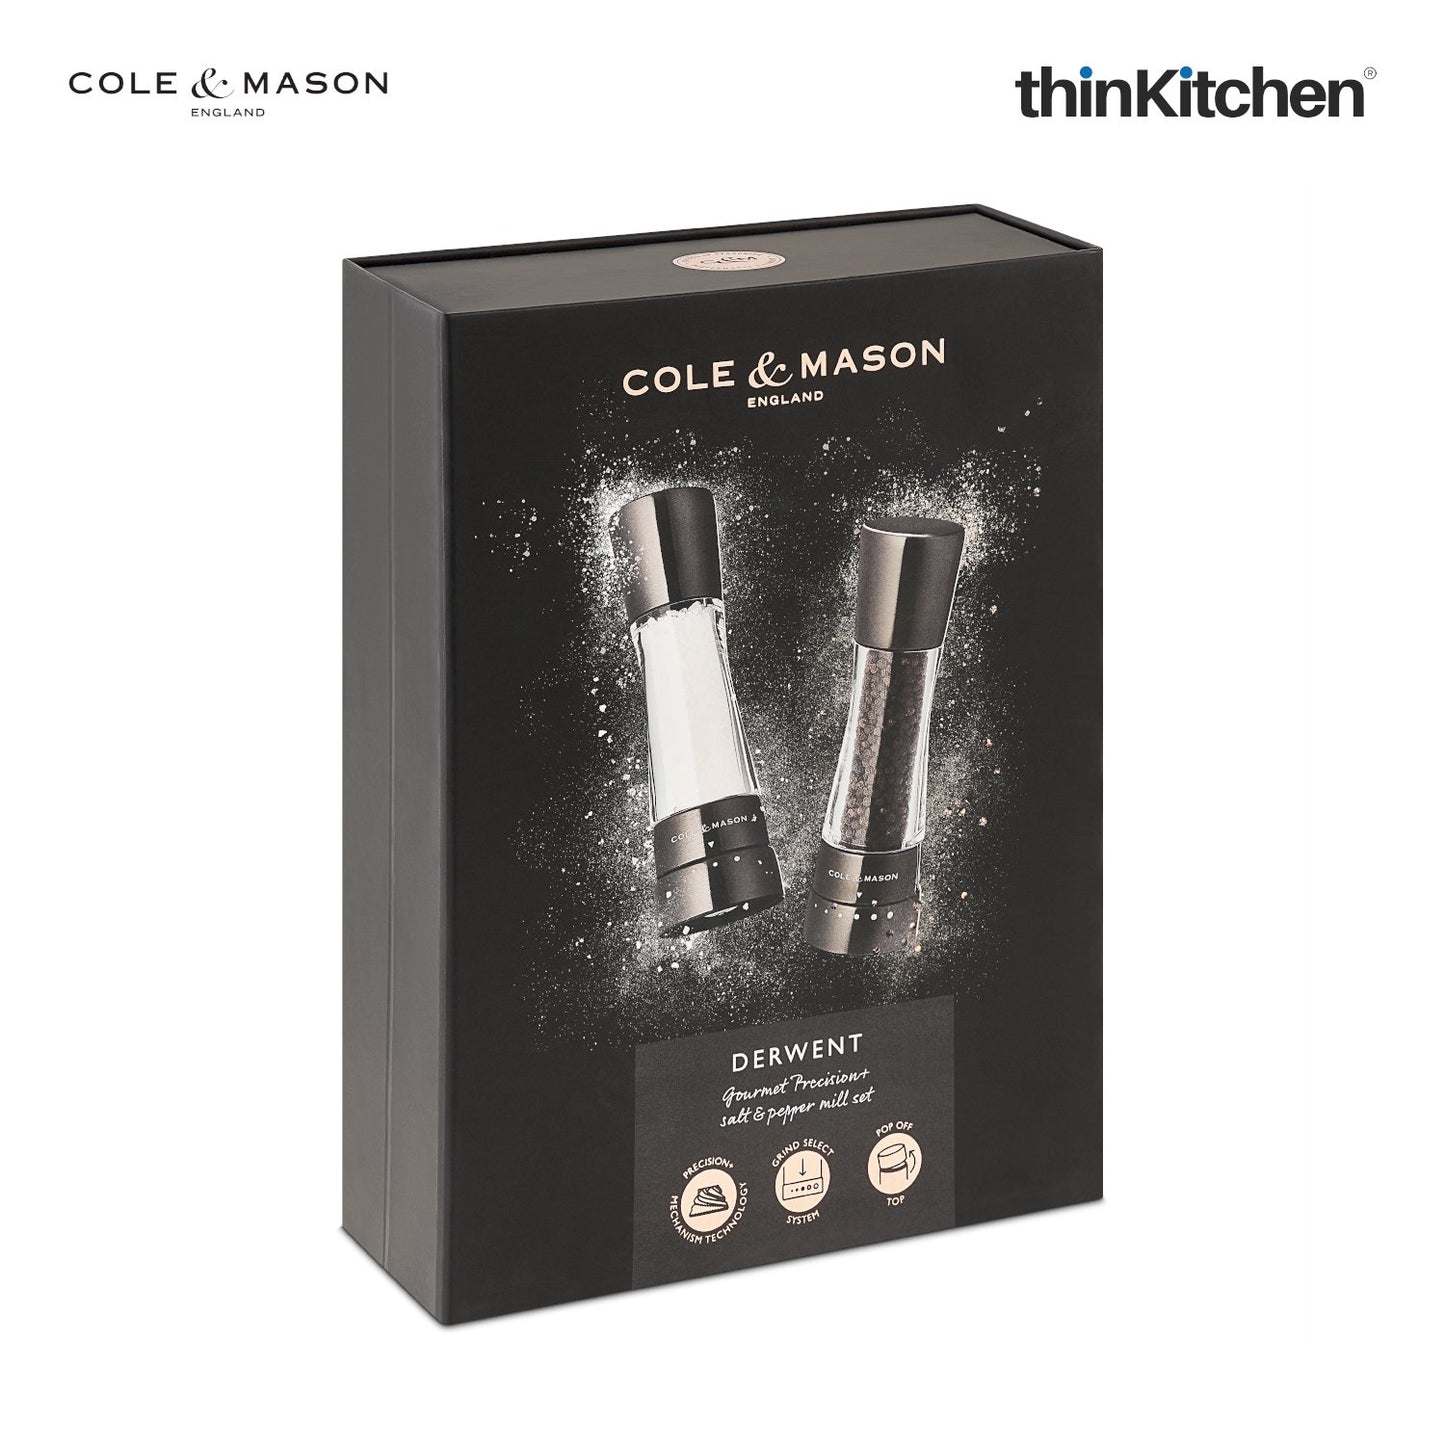 Cole & Mason Gourmet Precision Manual Derwent, 190mm, Gunmetal